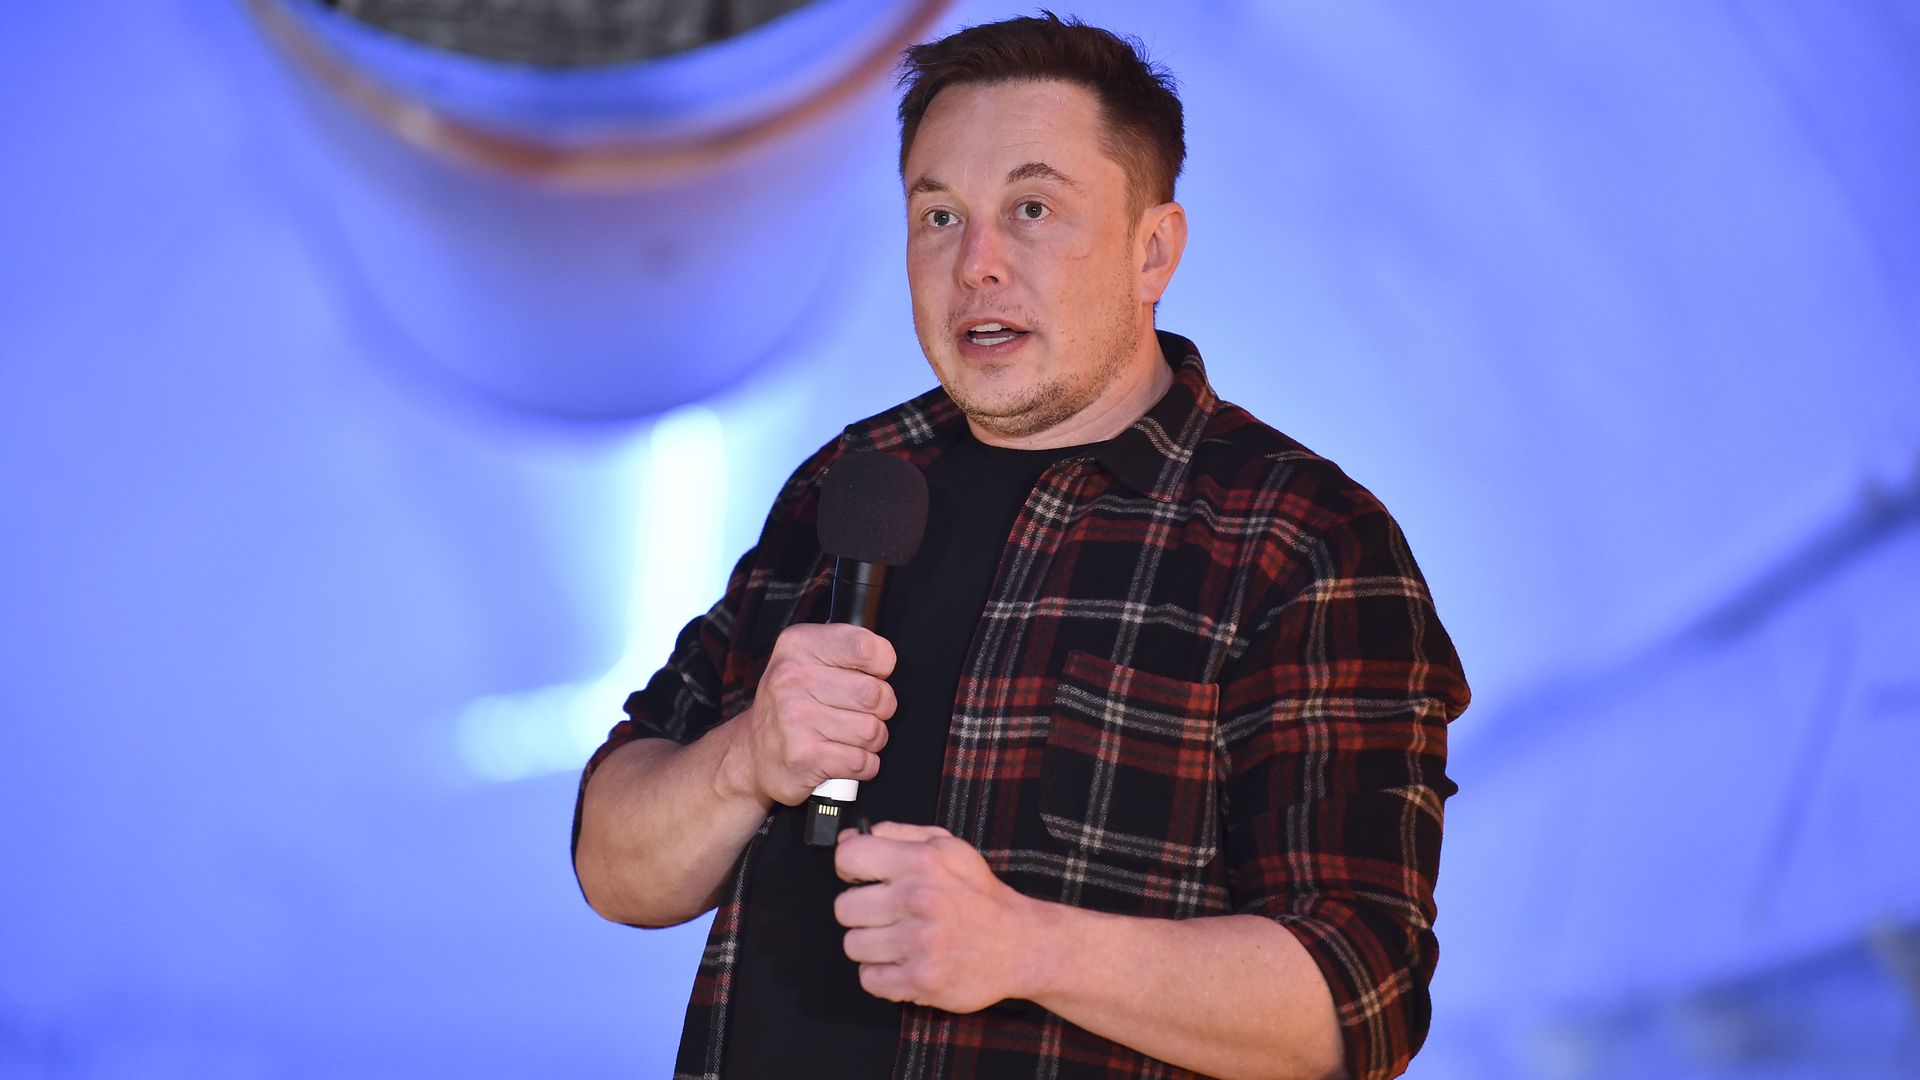 Elon musk on stage